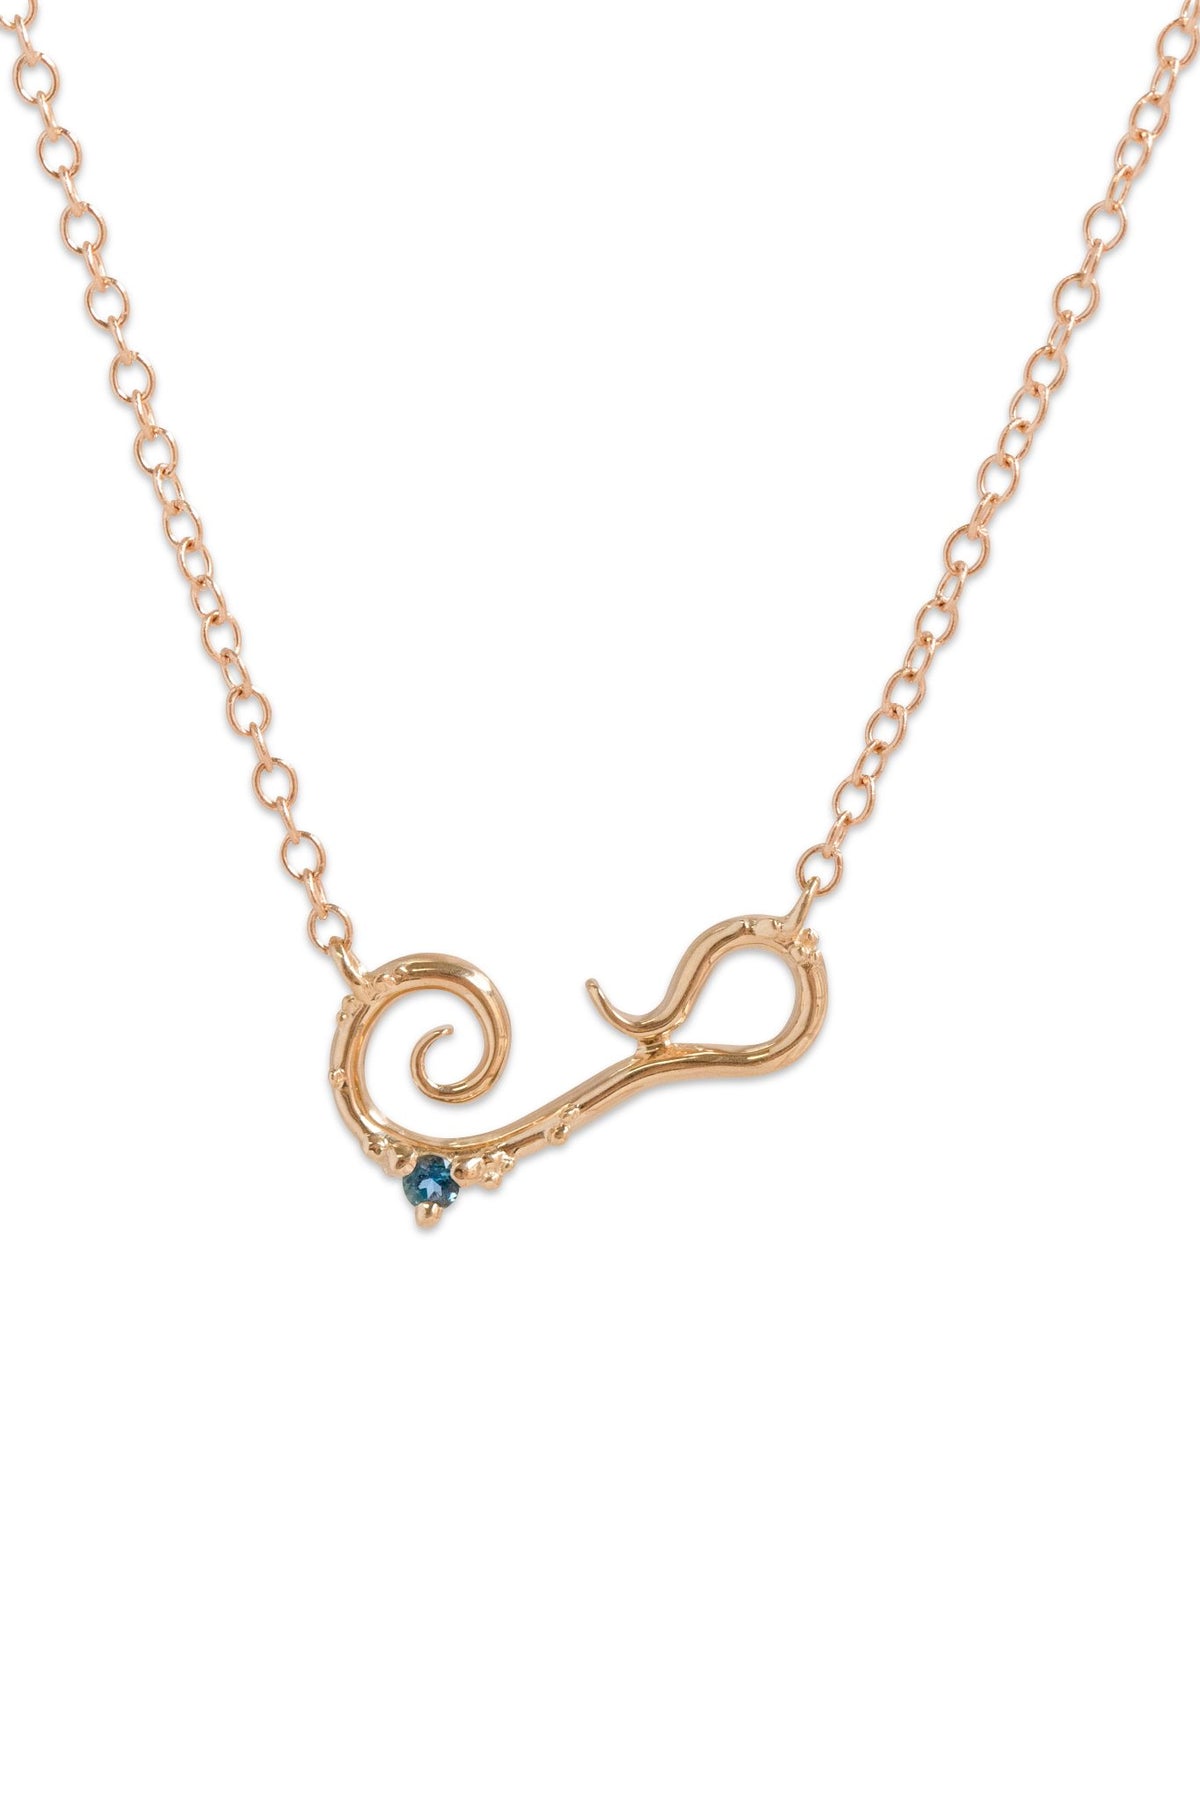 Bermuda ~ Birthstone Necklace in Gold - Alexandra Mosher Studio Jewellery Bermuda Fine